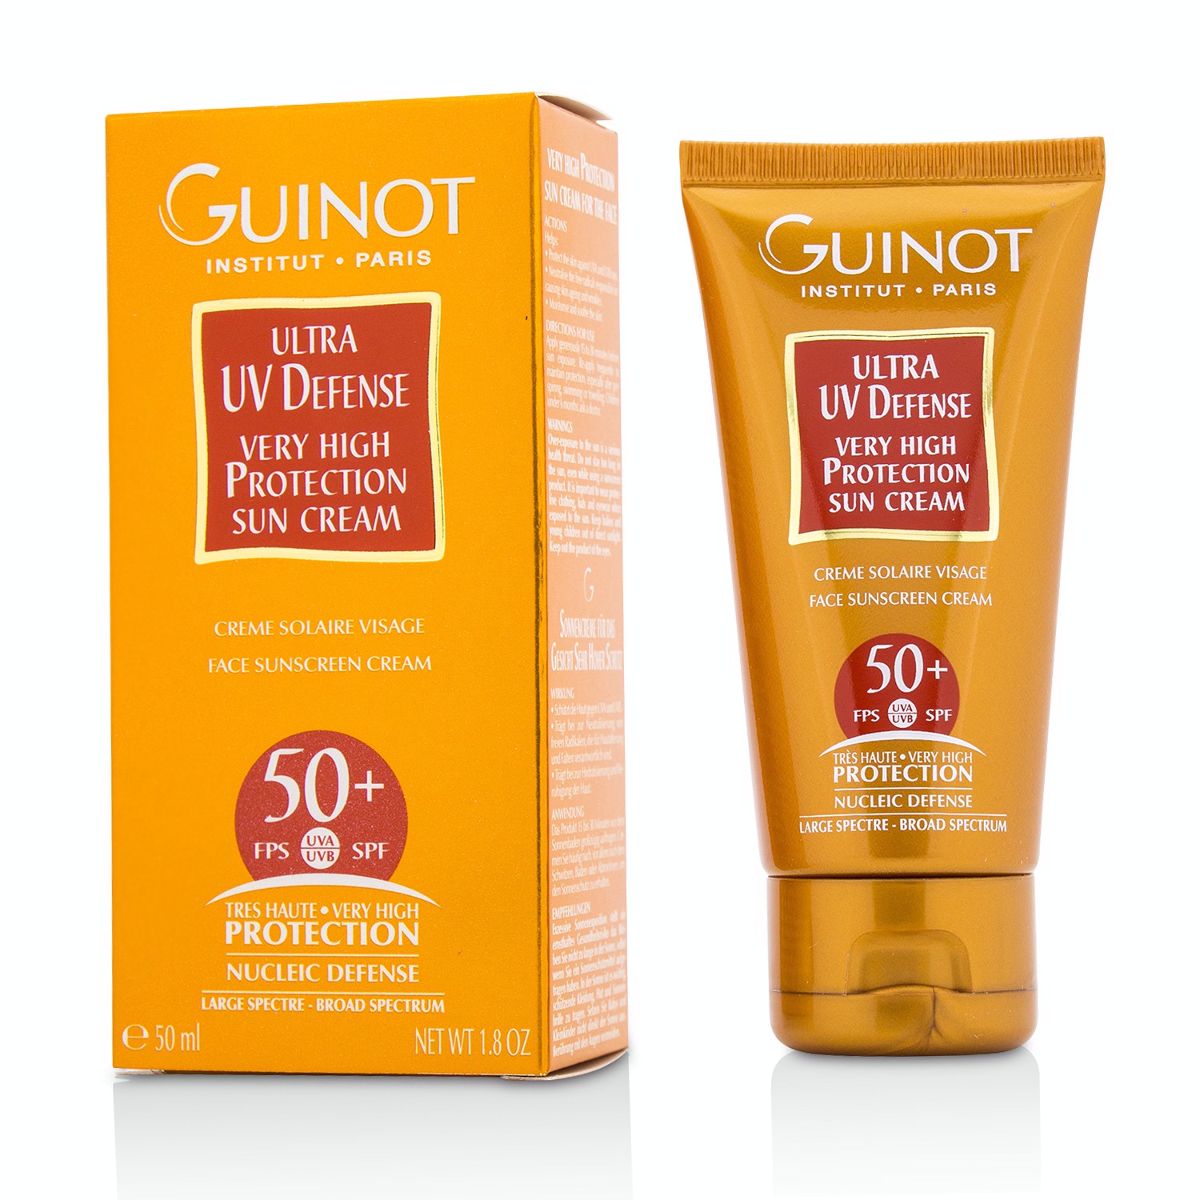 Ultra UV Defense Very High Protection Sun Cream SPF50+ Guinot Image